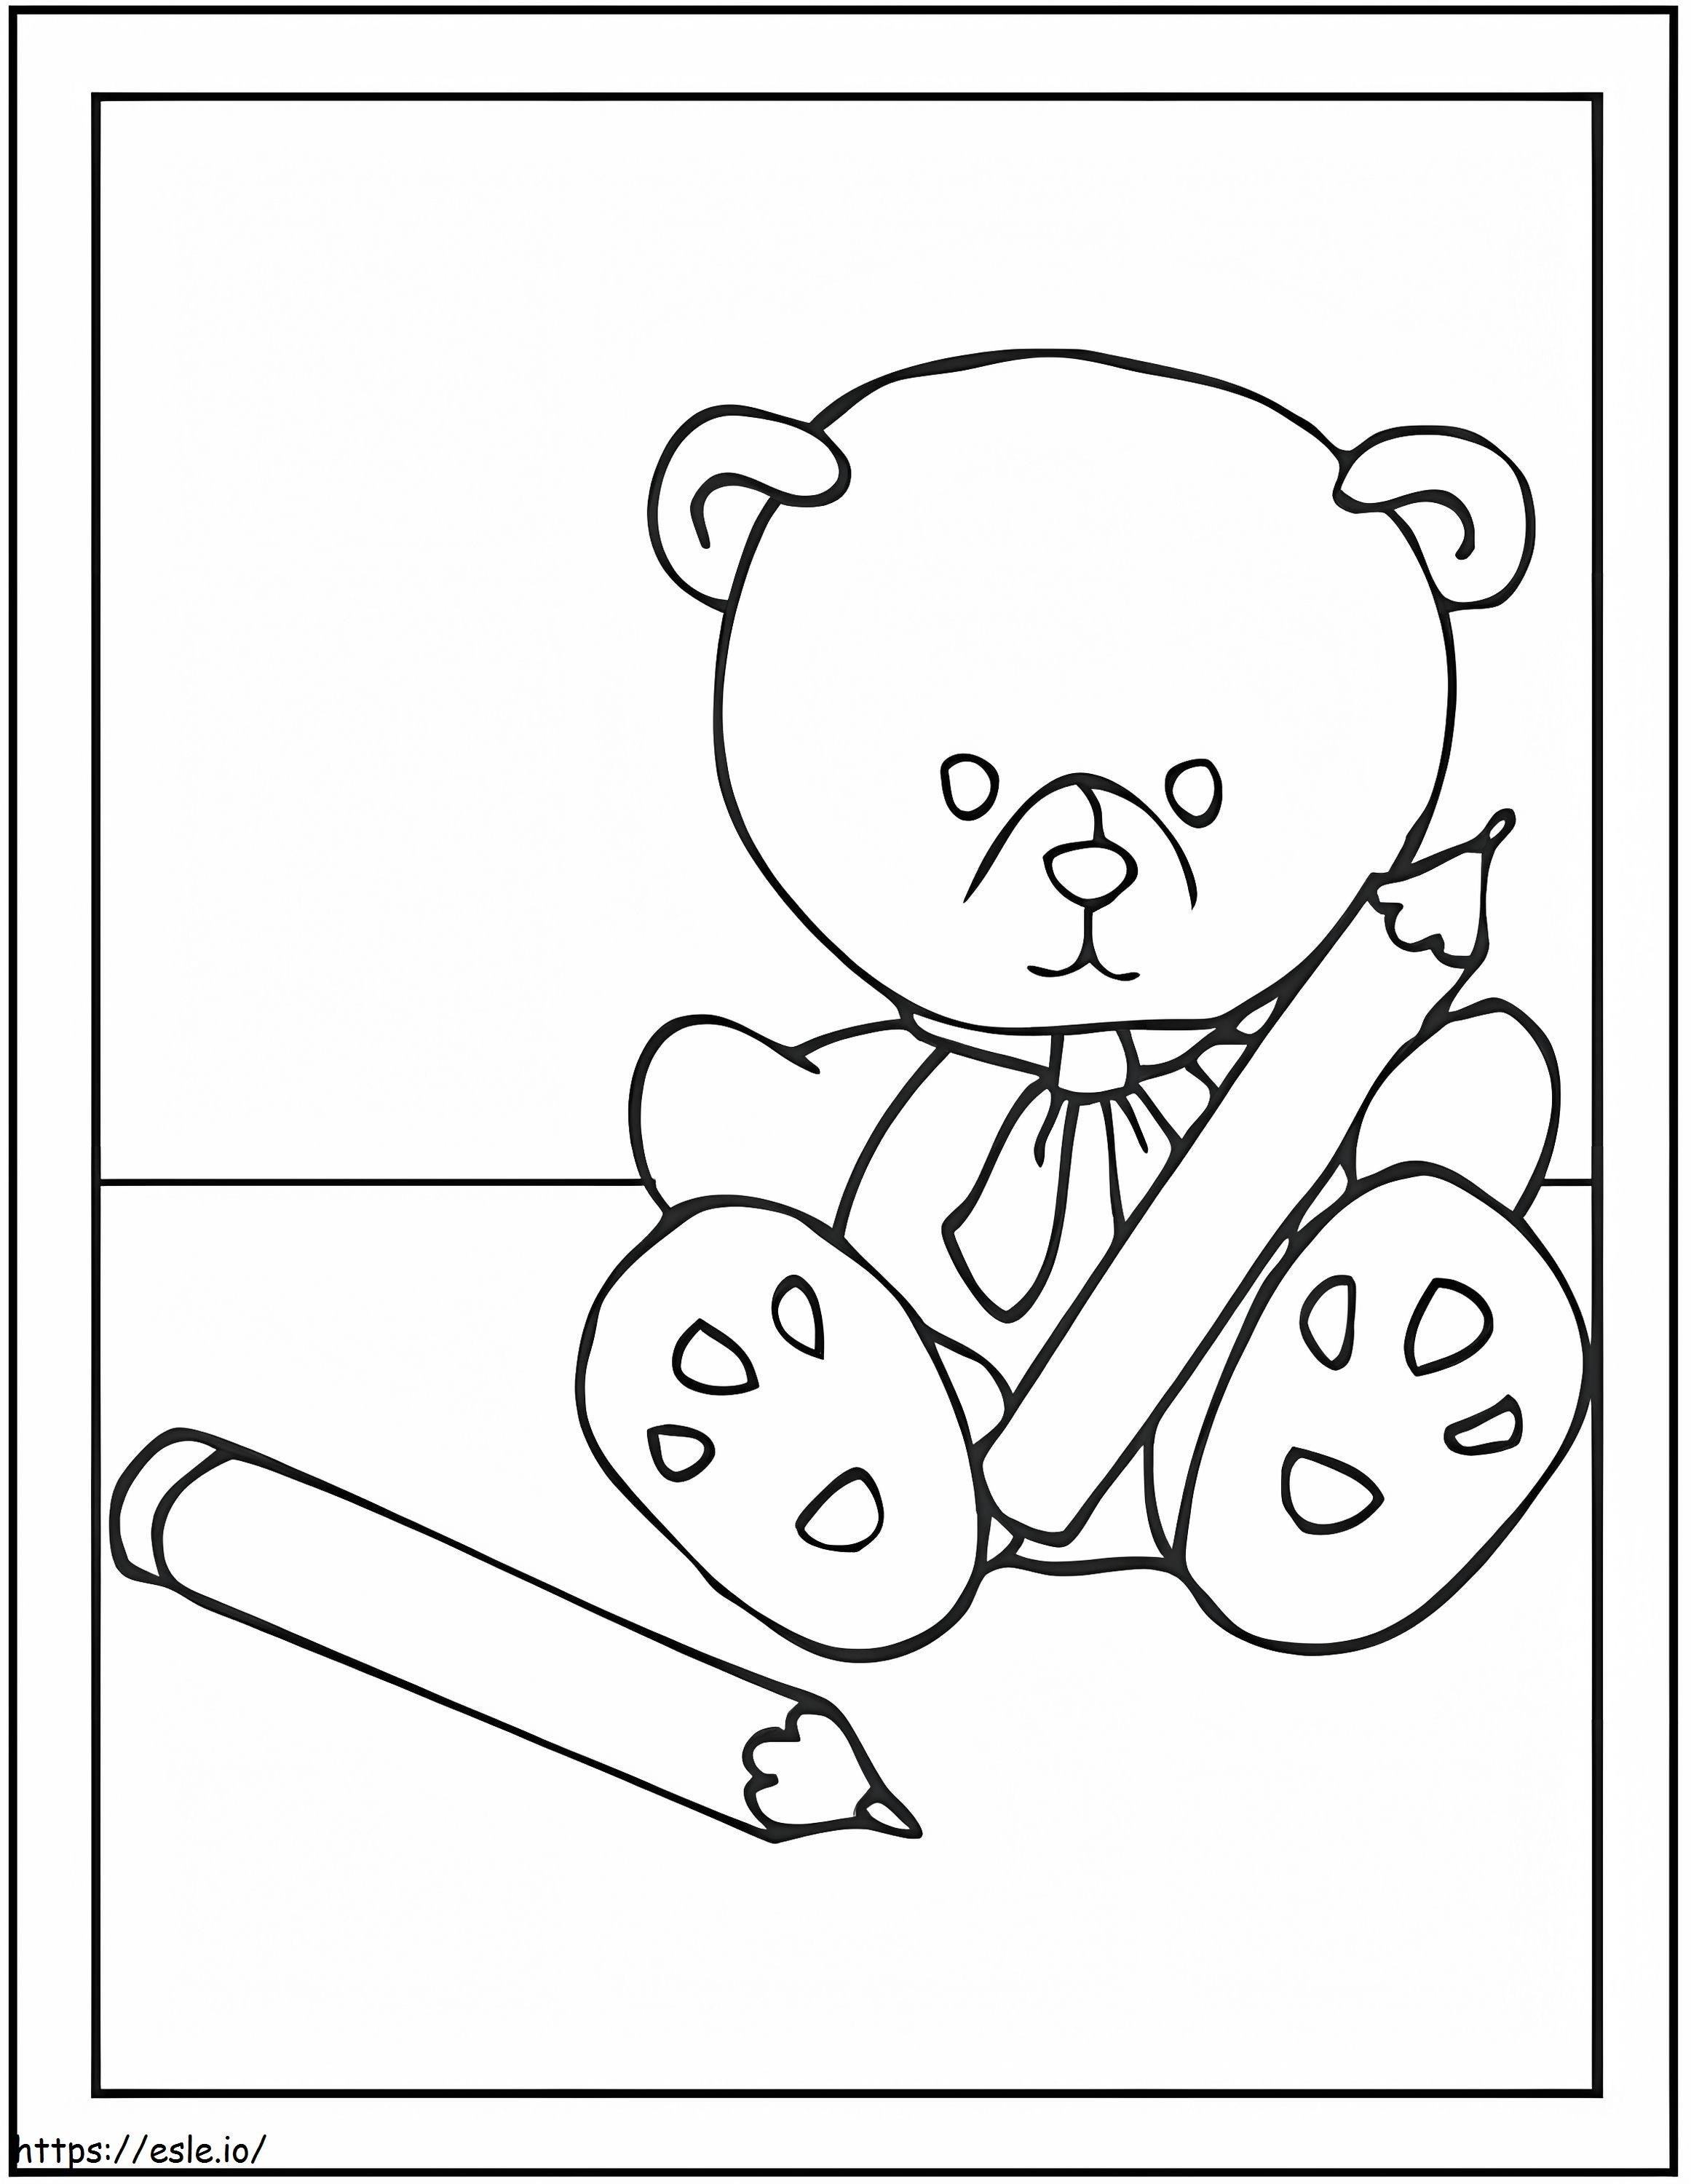 Teddybär mit Bleistift ausmalbilder